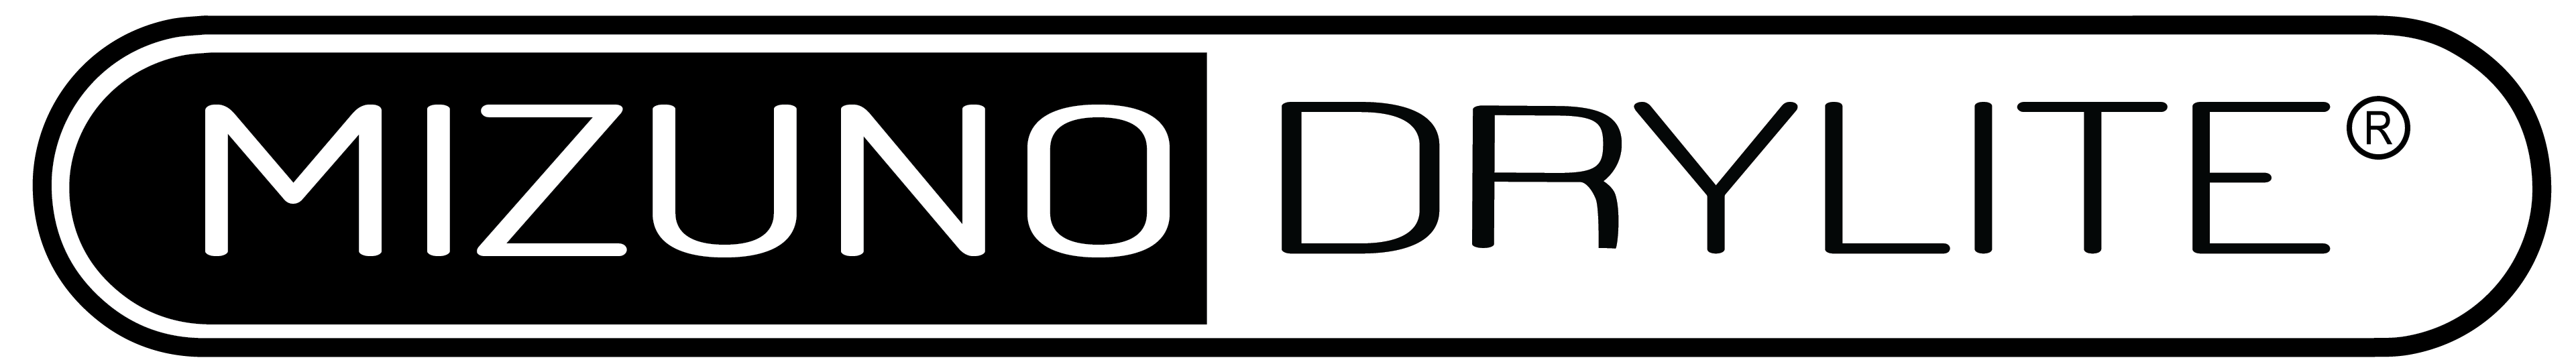 Dry Lite Logo